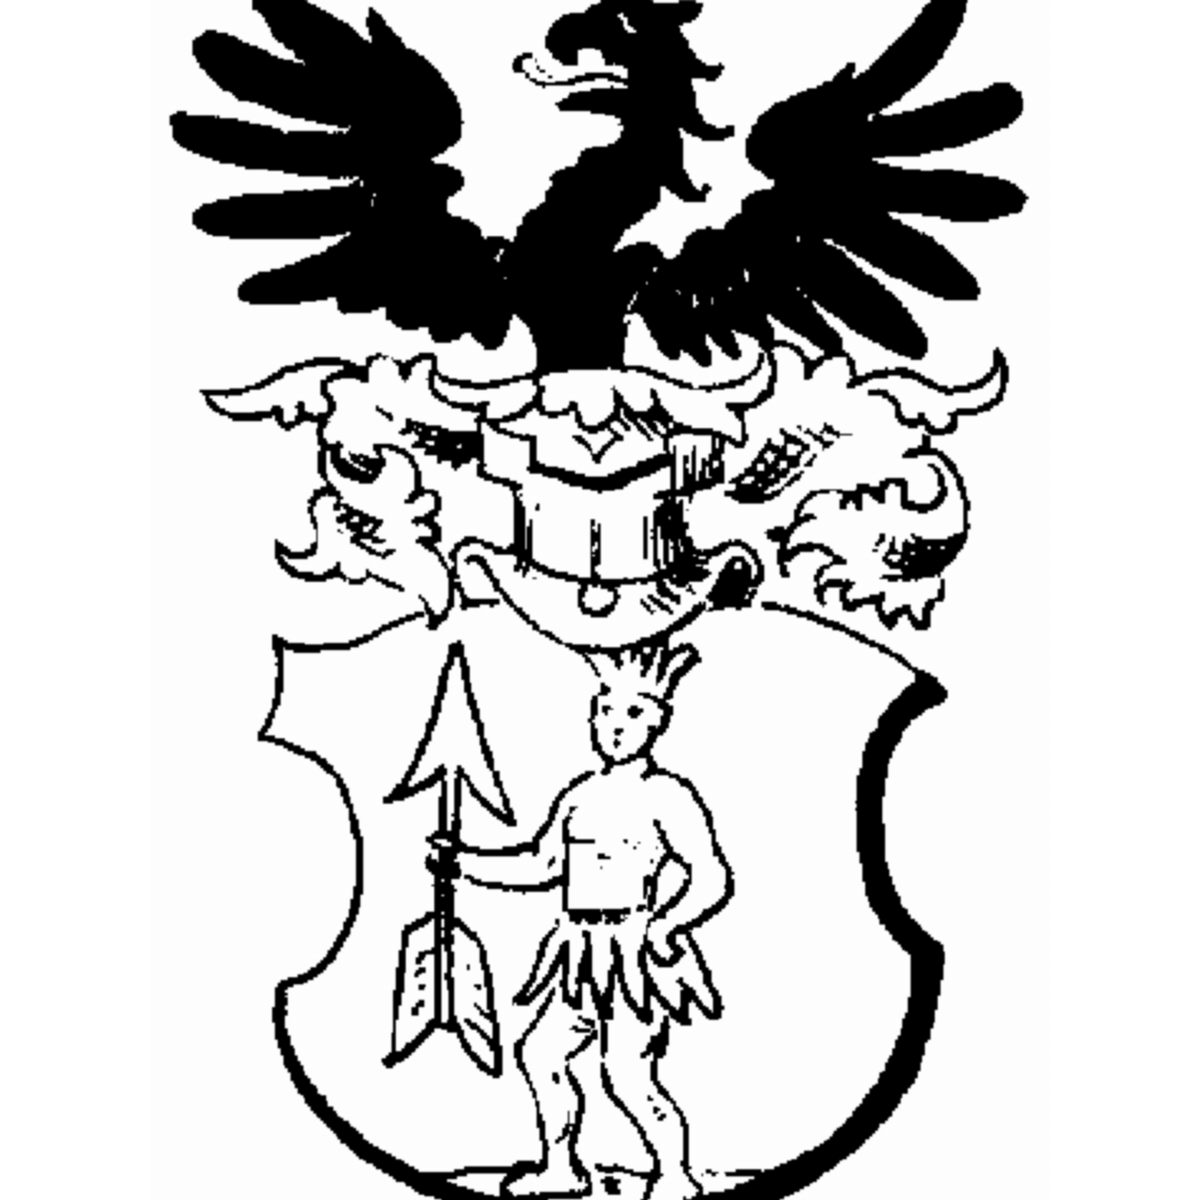 Brasão da família Schönwetter